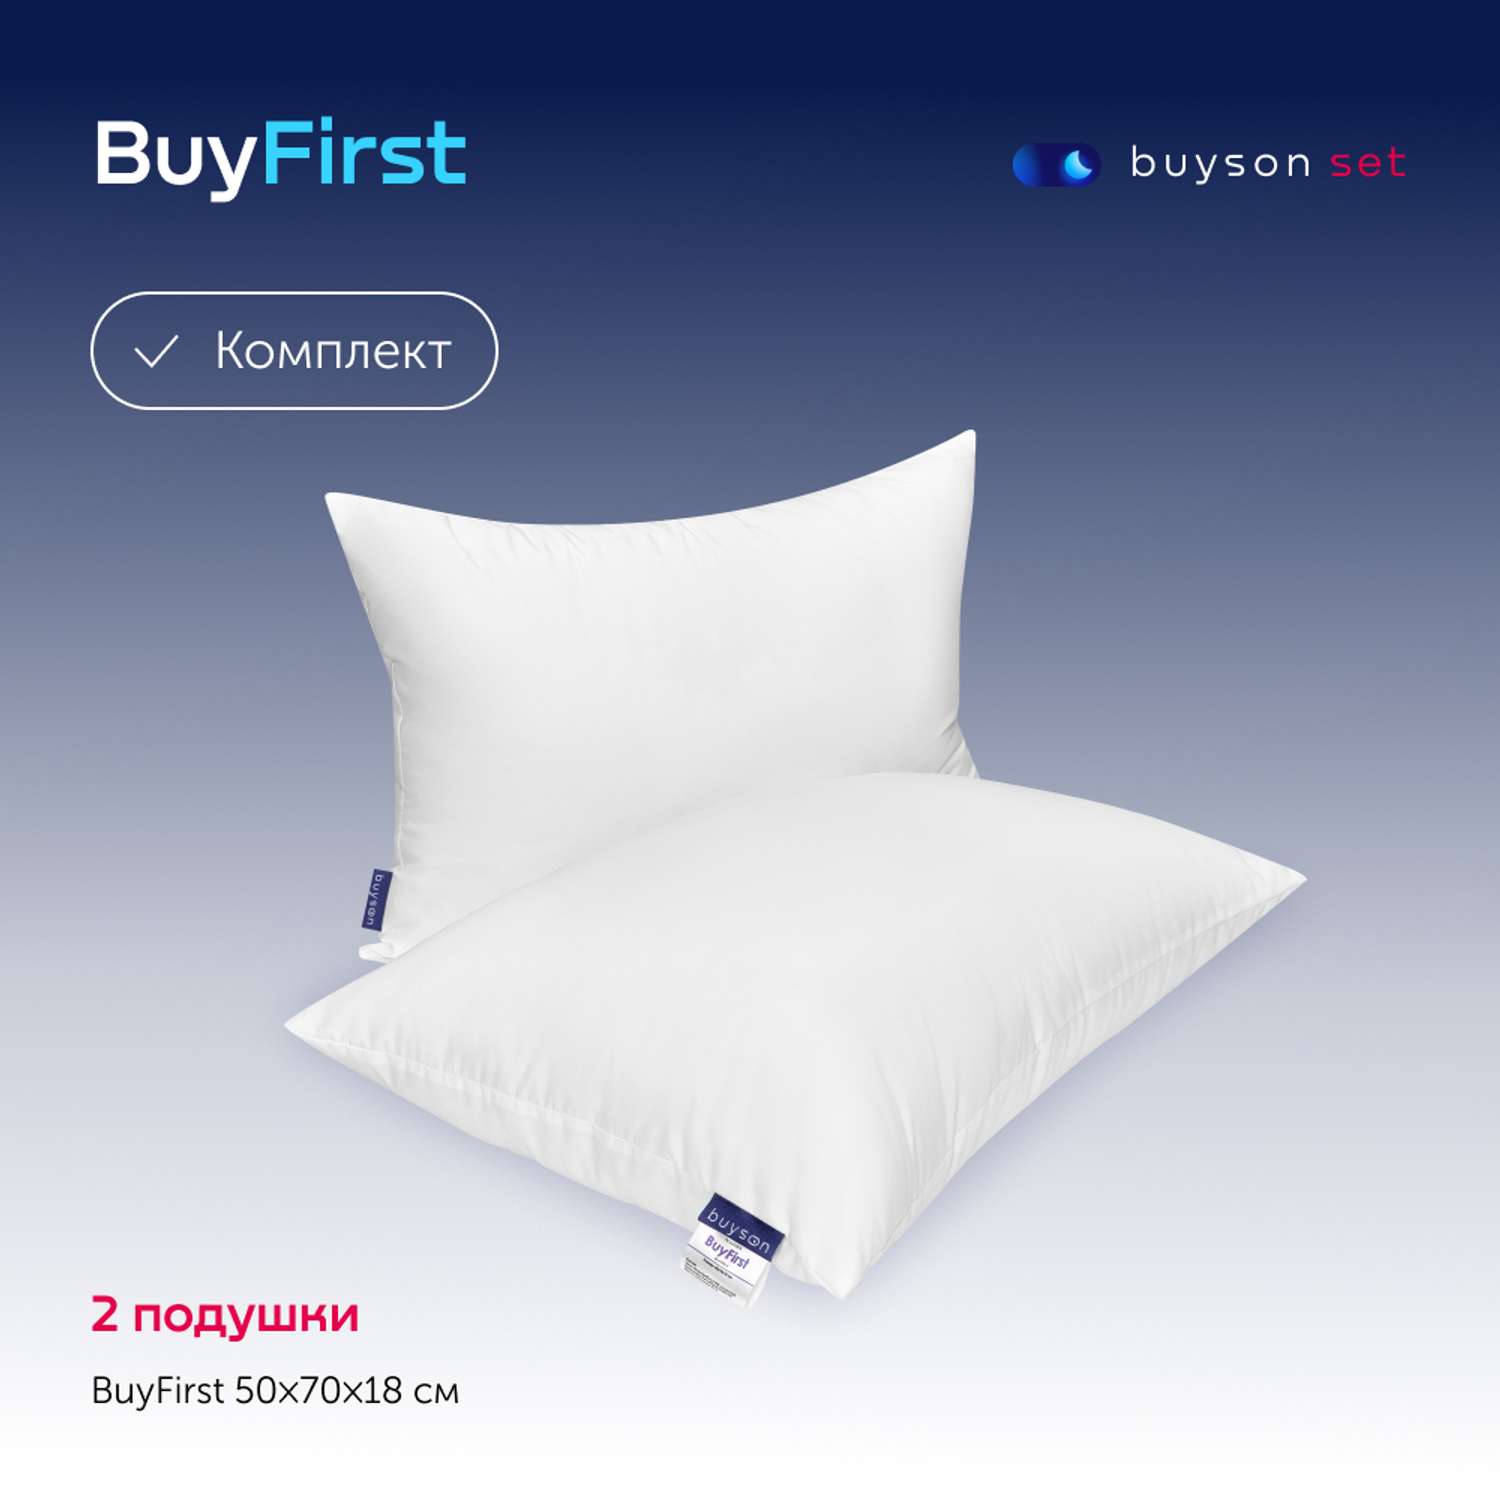 Набор buyson BuyFirst из двух подушек 50х70 - фото 1